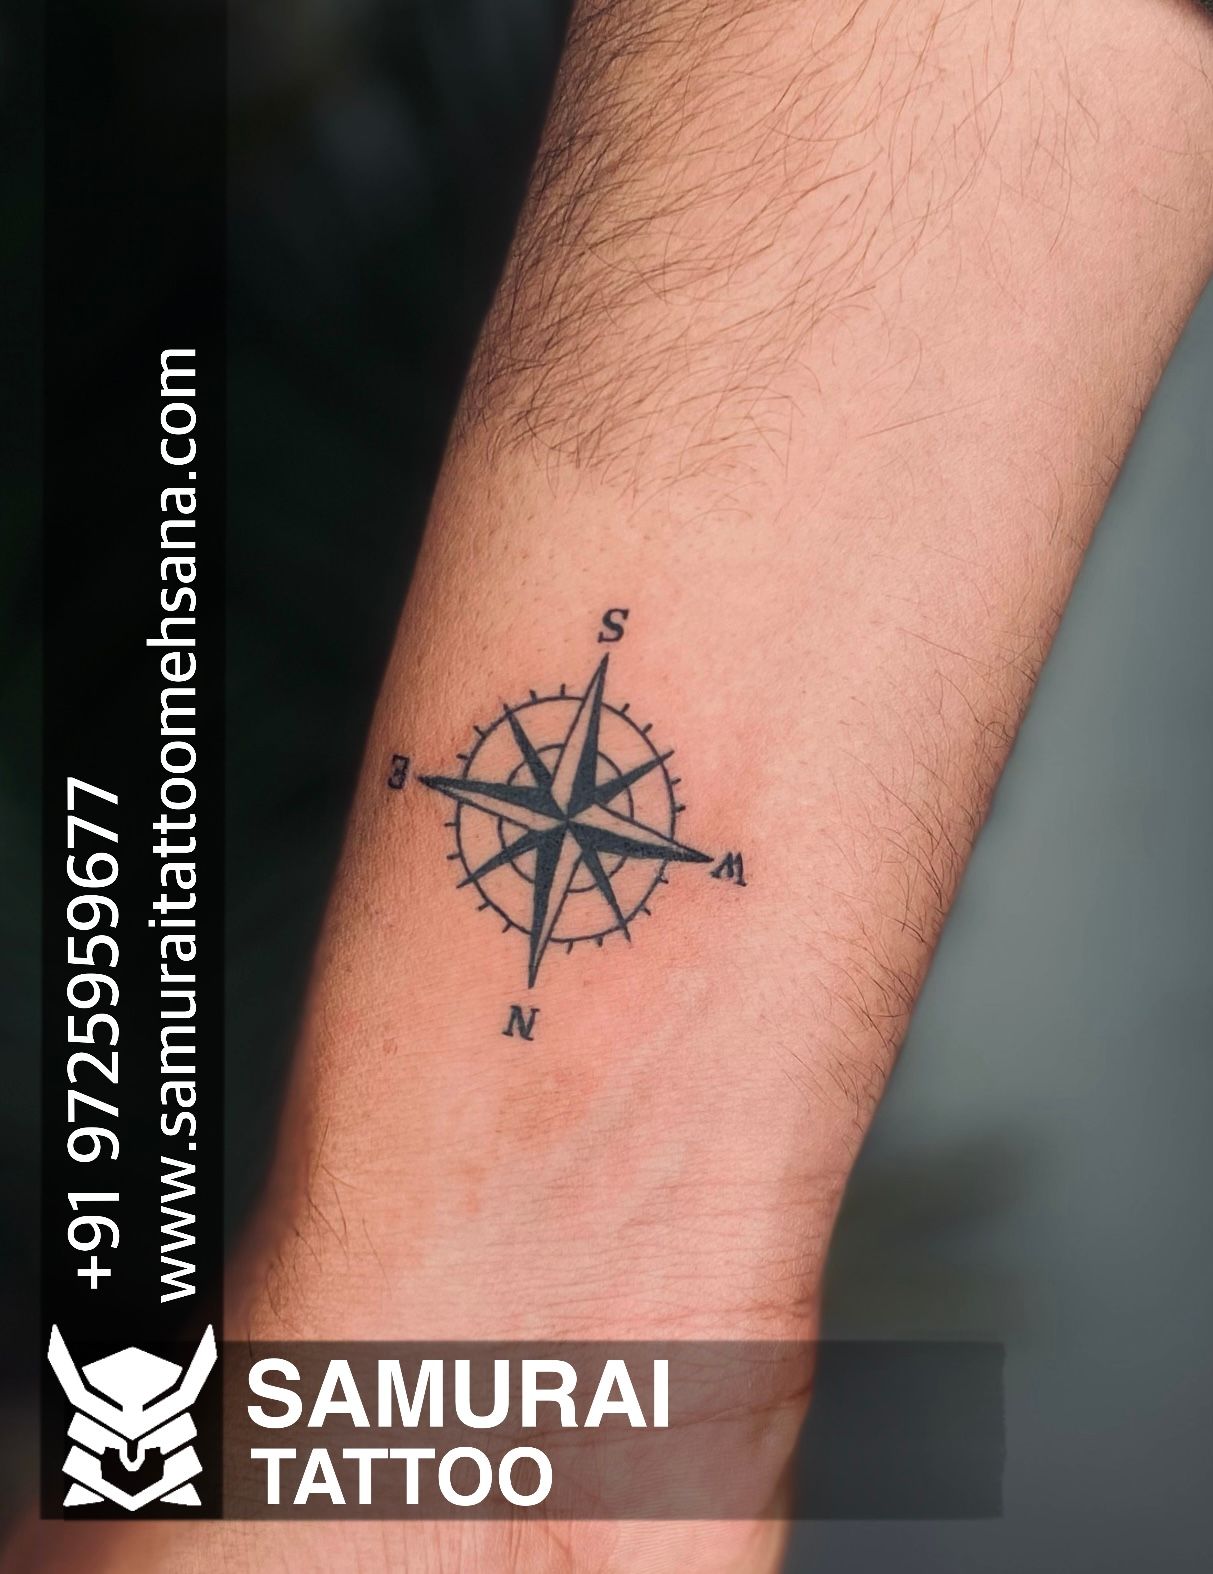 100,000 Compass tattoo Vector Images | Depositphotos